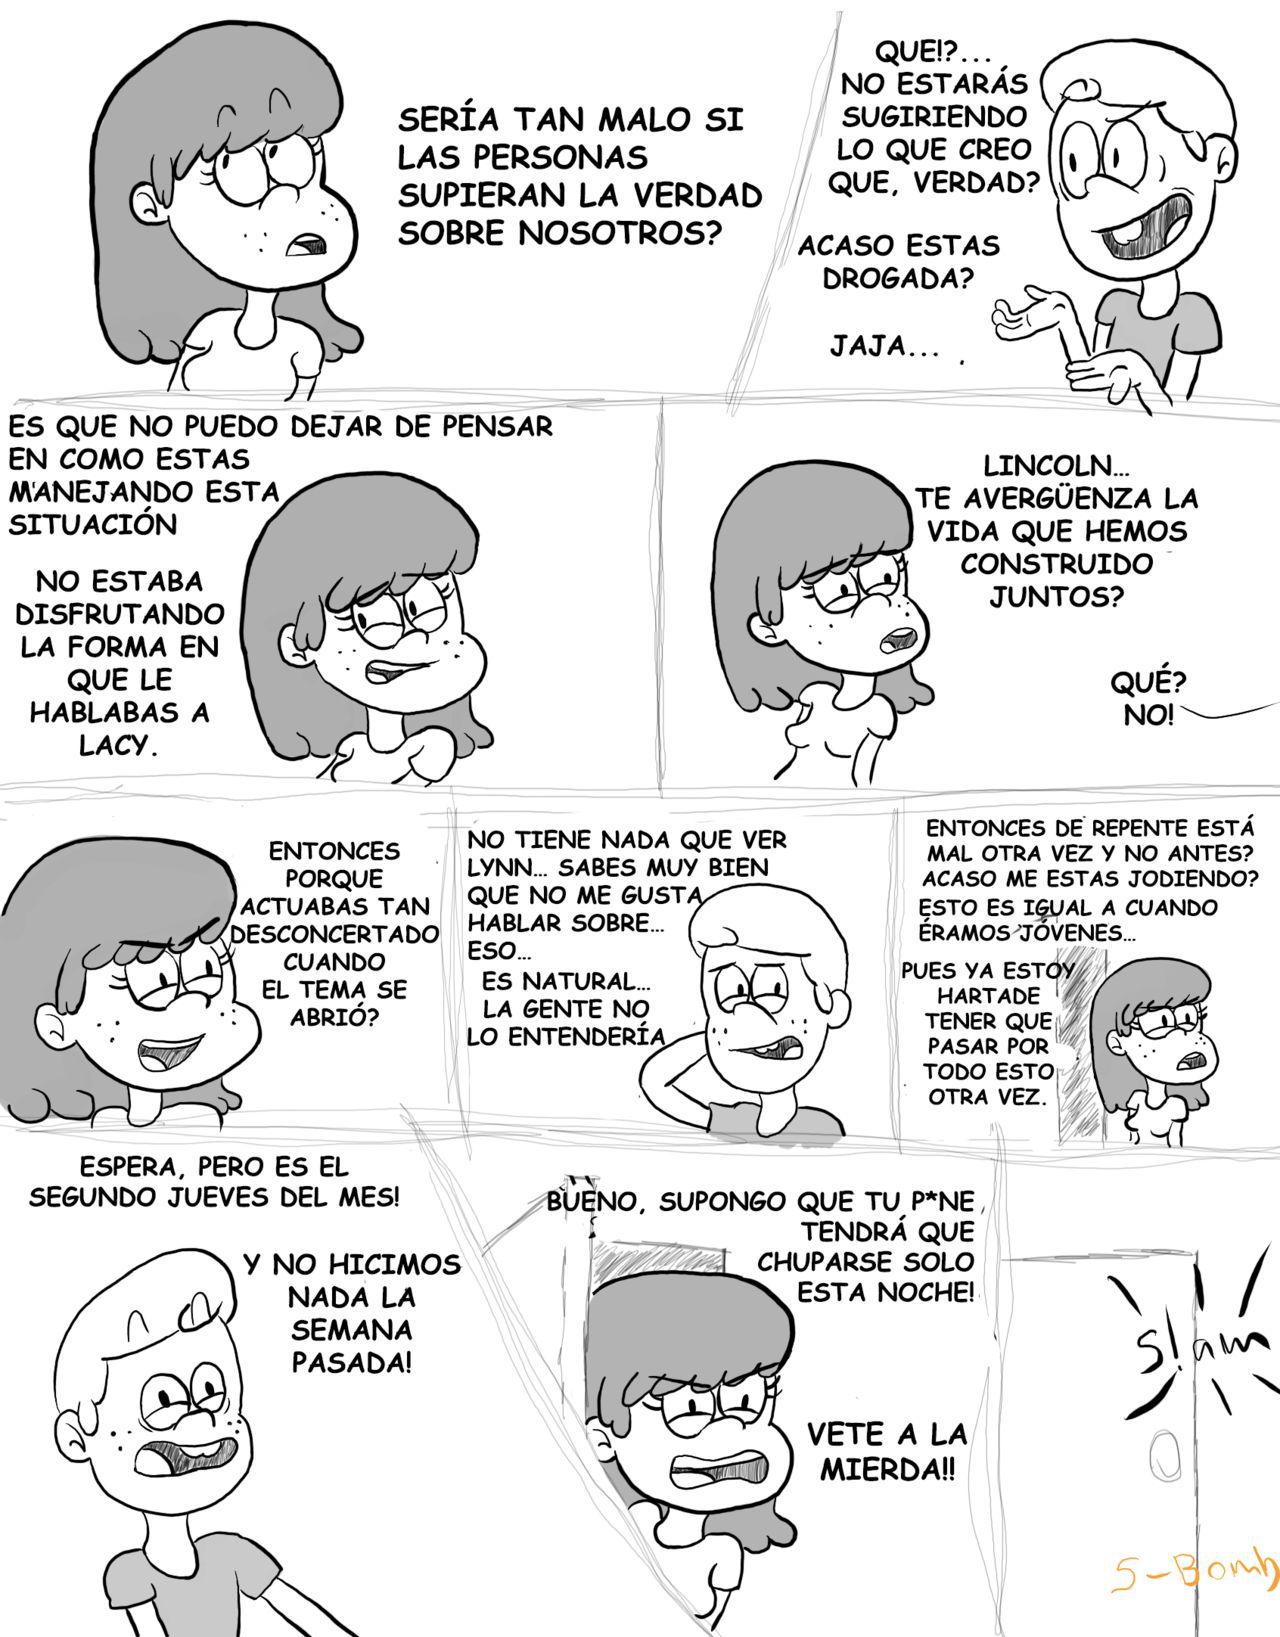 [Shawnlabomb] The Lacy Comic (Spanish) [OyeZi7w7] (En Progreso) [Shawnlabomb] The Lacy Comic 8